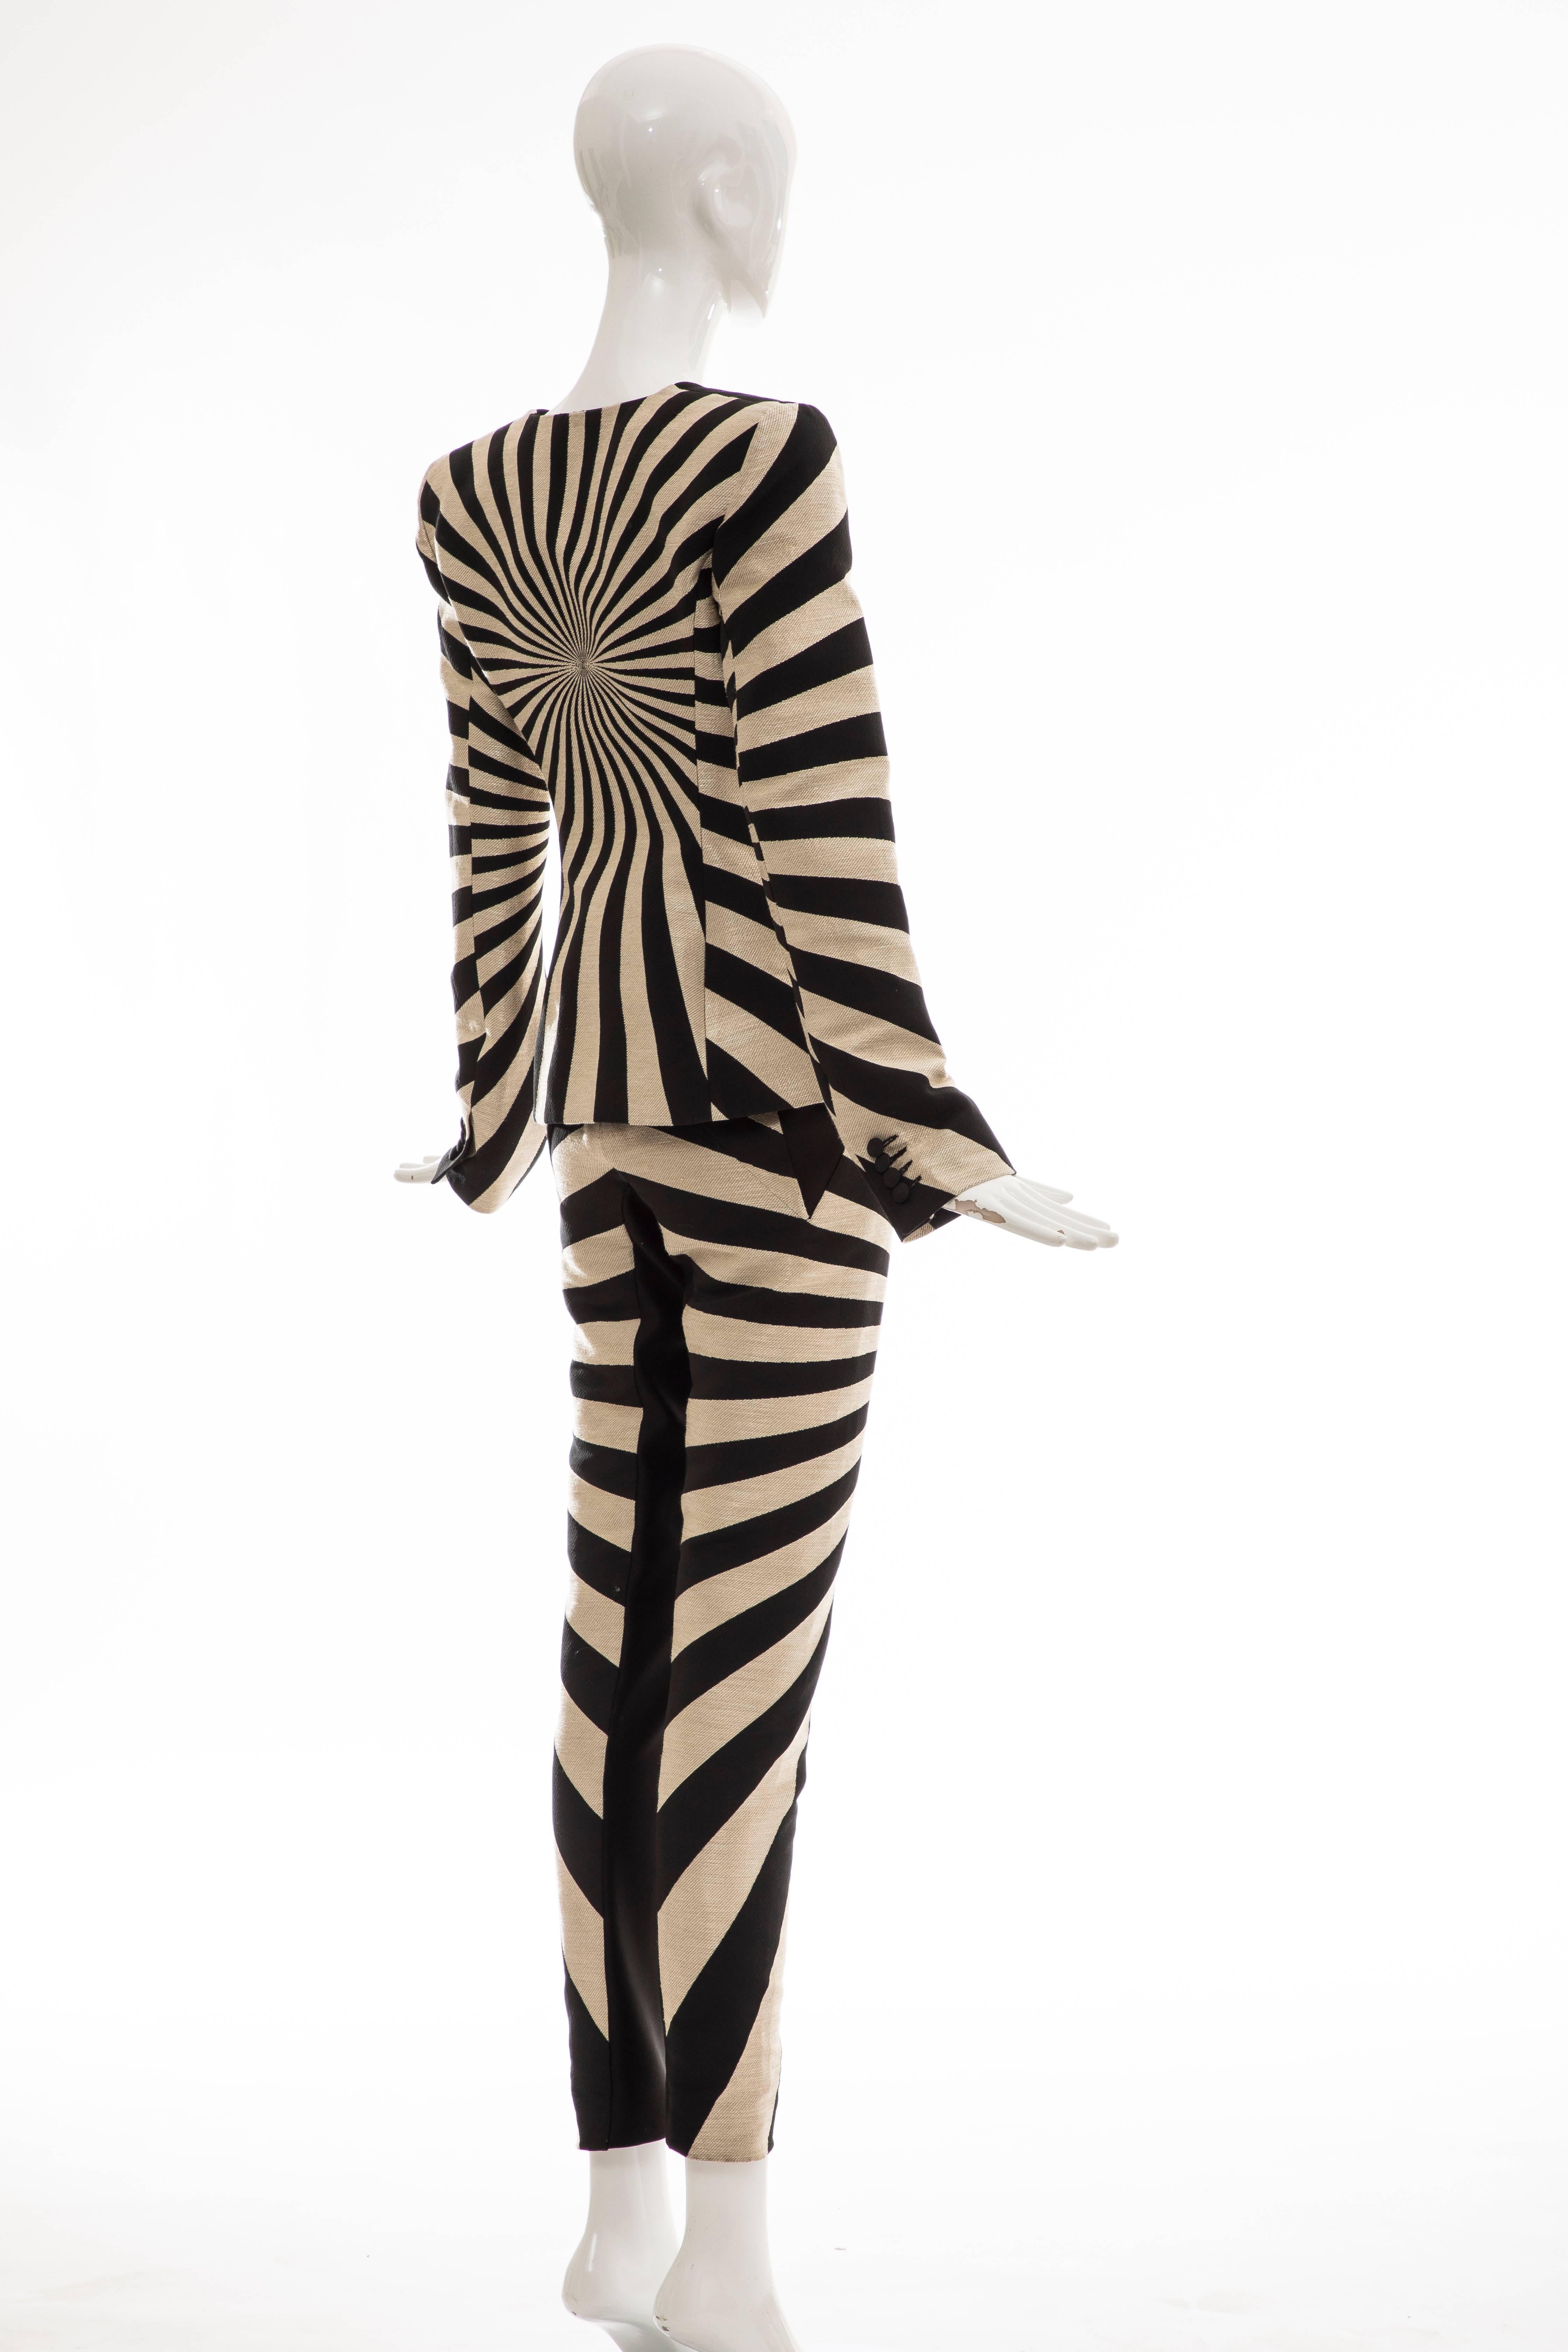 Gareth Pugh Woven Striped Pattern Pantsuit, Spring 2017 For Sale 1